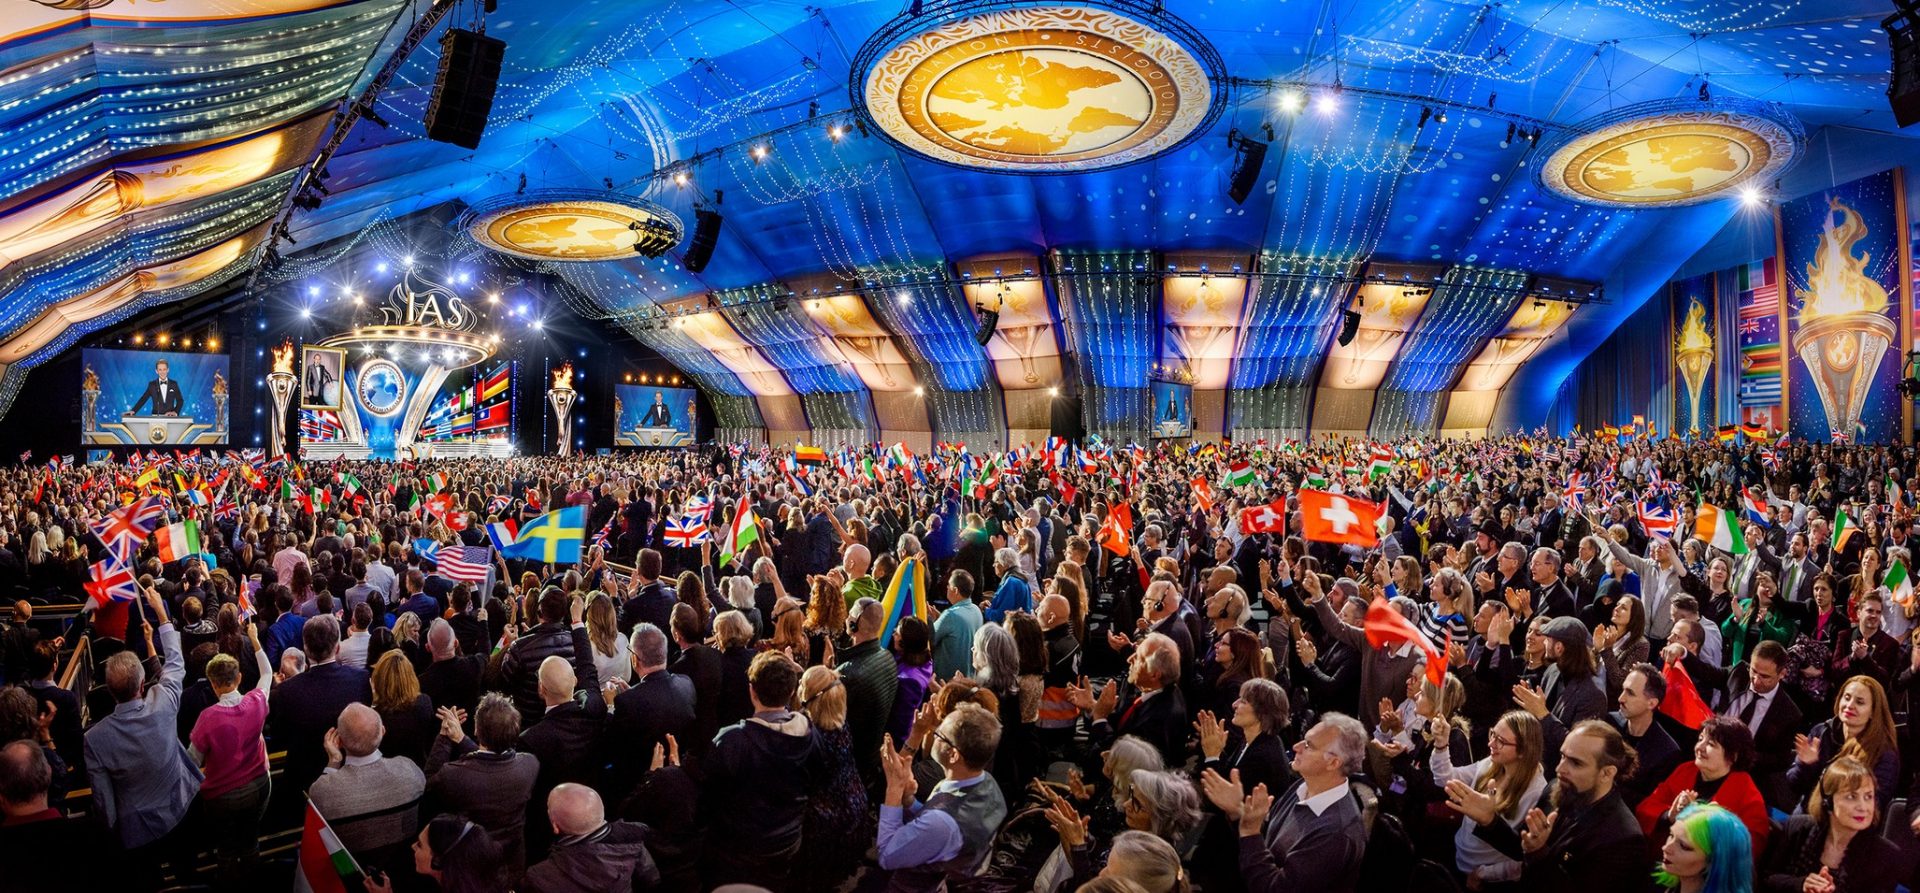 Scientology’s IAS charitable organization Celebrates and Commemorates Era of Unprecedented Global Humanitarian Work